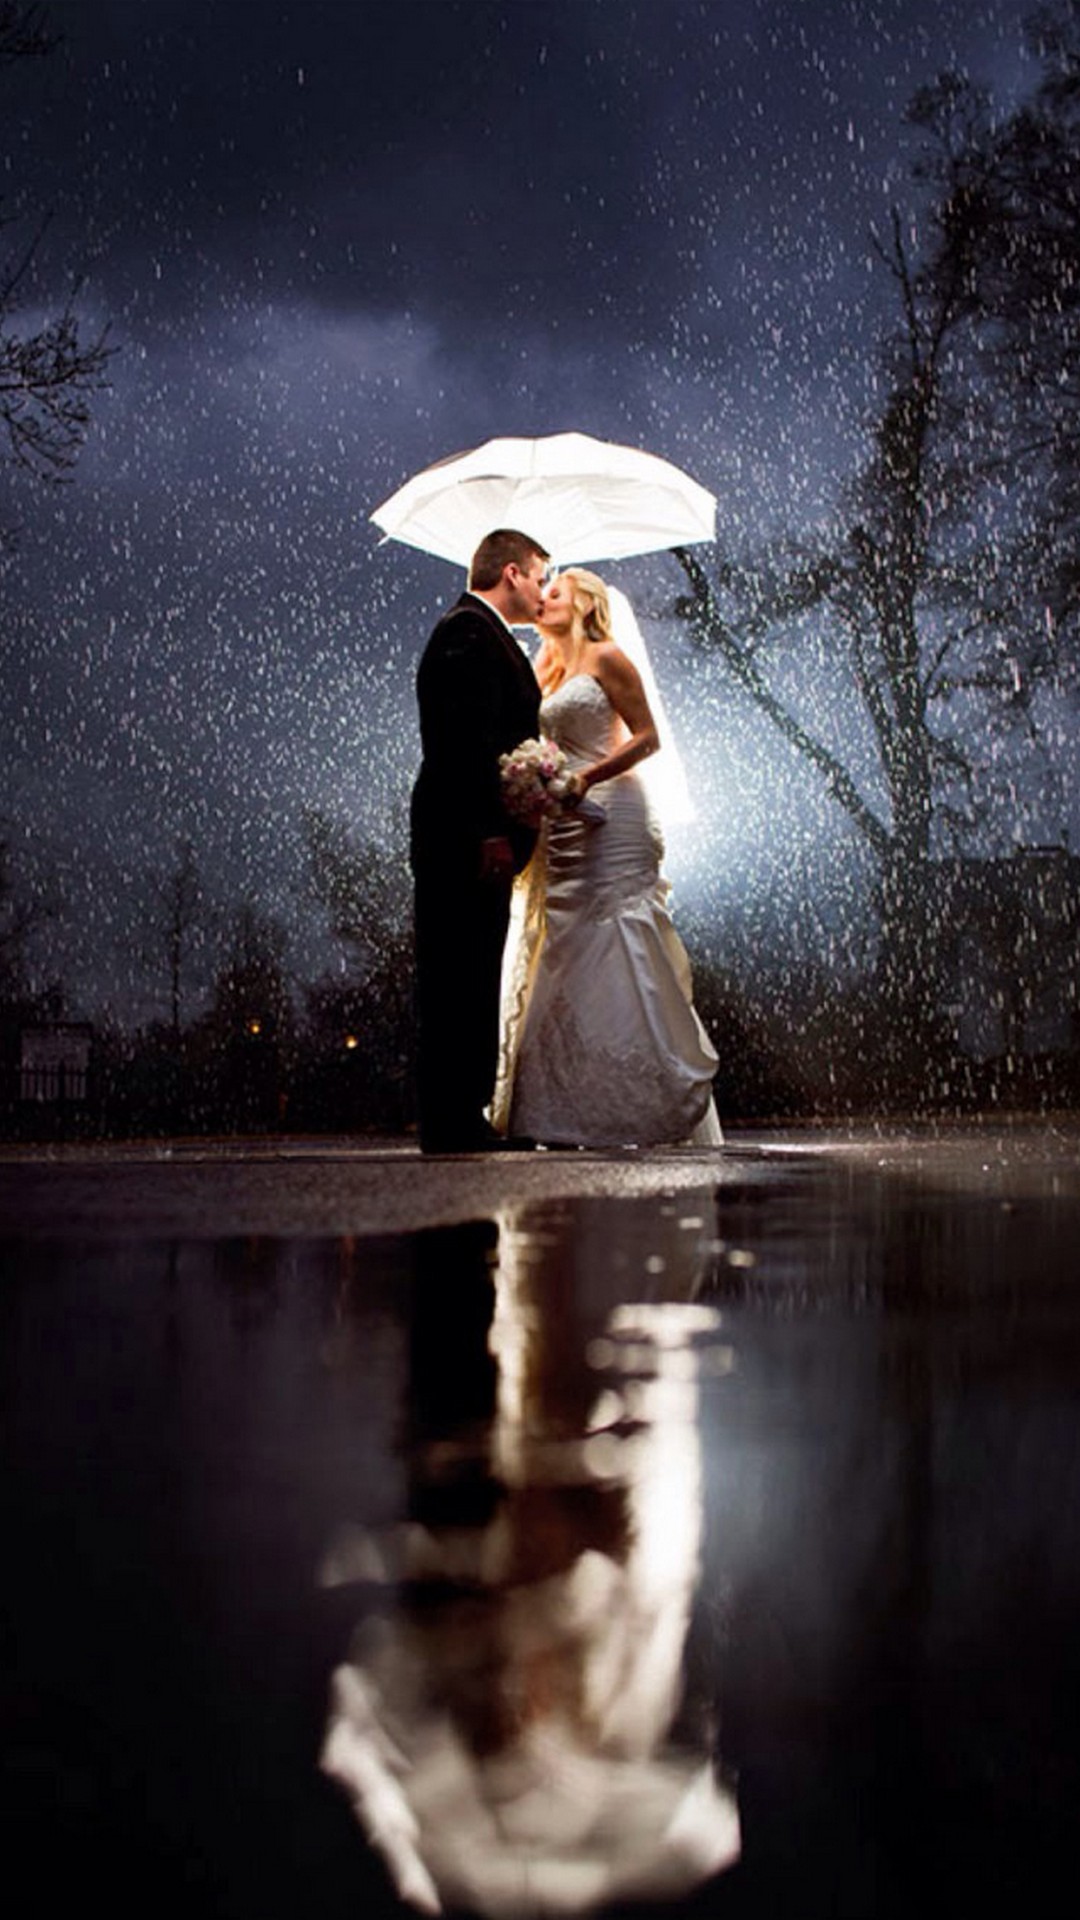 Best Couple Phone Wallpaper Images Resolution - Wedding Rain - 1080x1920  Wallpaper 